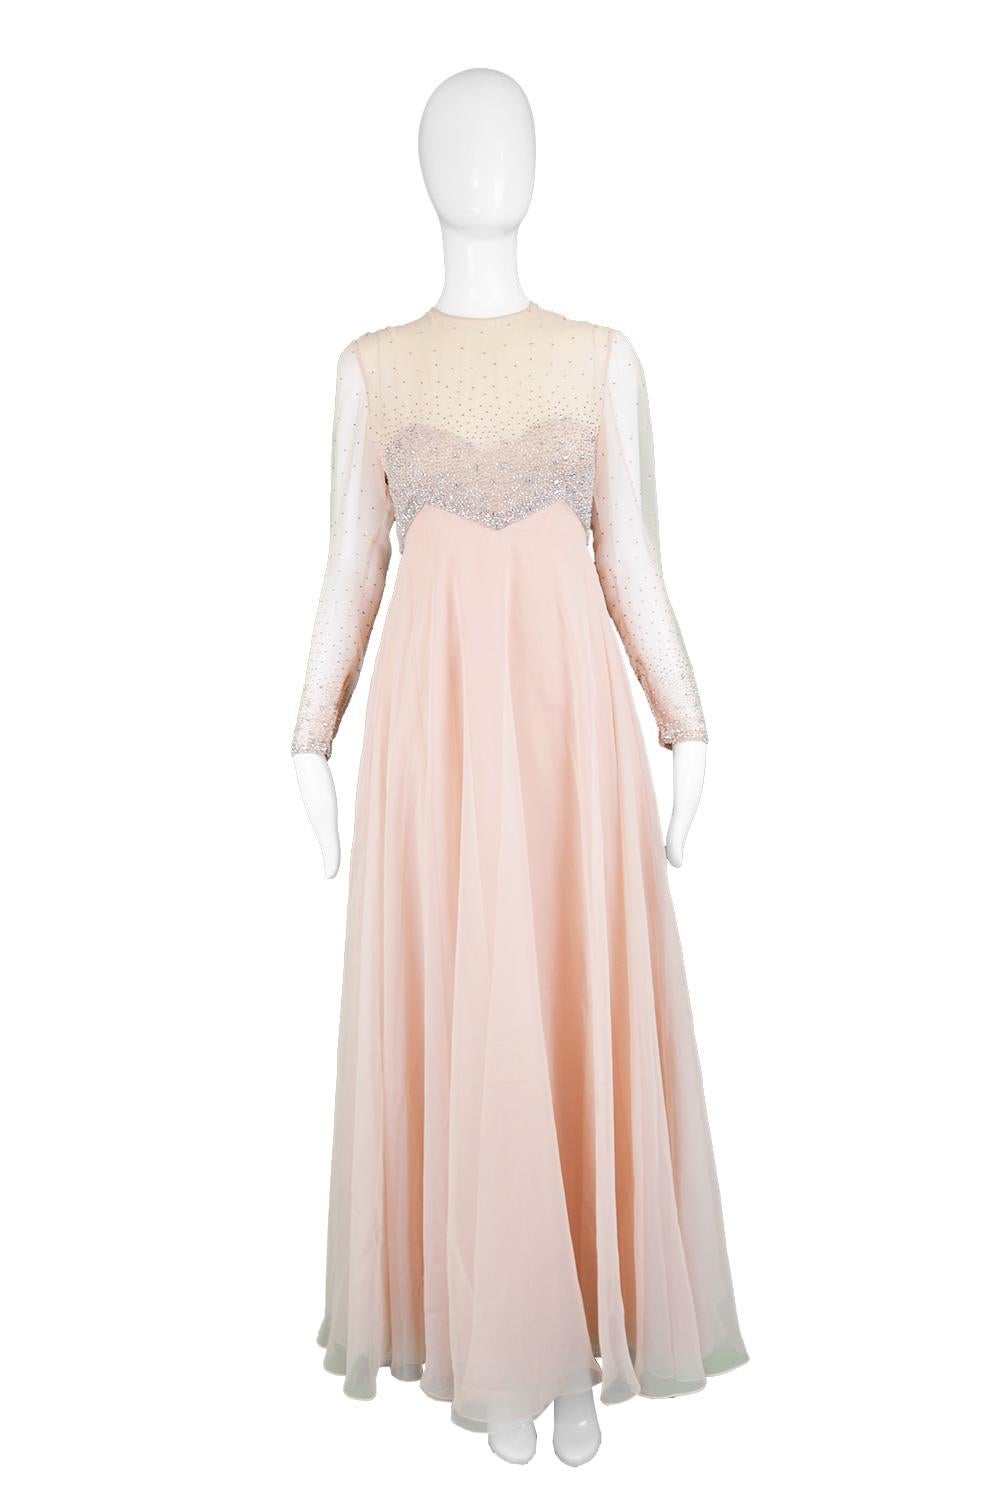 Victoria Royal Vintage Hong Kong Beaded Peach Chiffon Evening Gown, 1960s

Estimated Size: UK 8/ US 4/ EU 36. Please check measurements. 
Bust - 34” / 86cm
Waist - 26” / 66cm
Hips - 40” / 101cm
Length (Shoulder to Hem) - 56”/ 142cm
Shoulder to